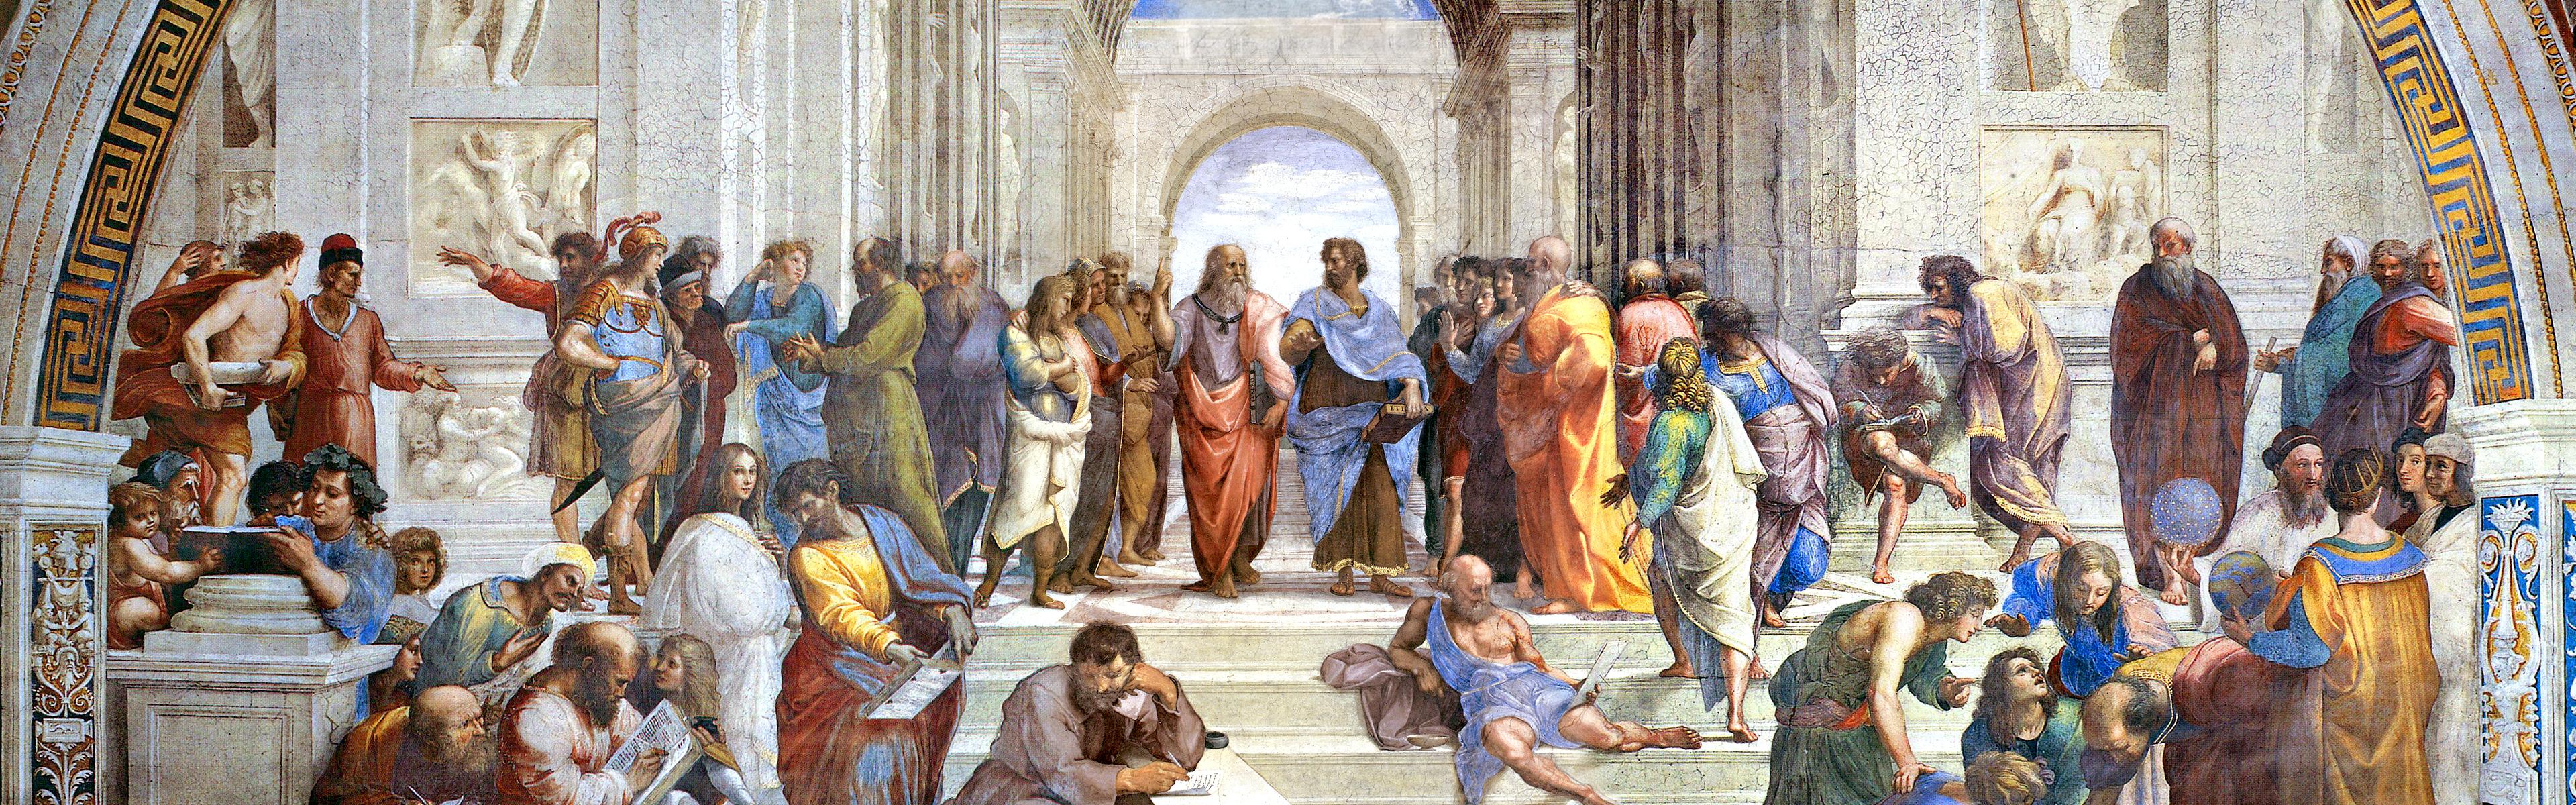 Socrates, Aristotle, The School of Athens, philosophers, Plato wallpaper